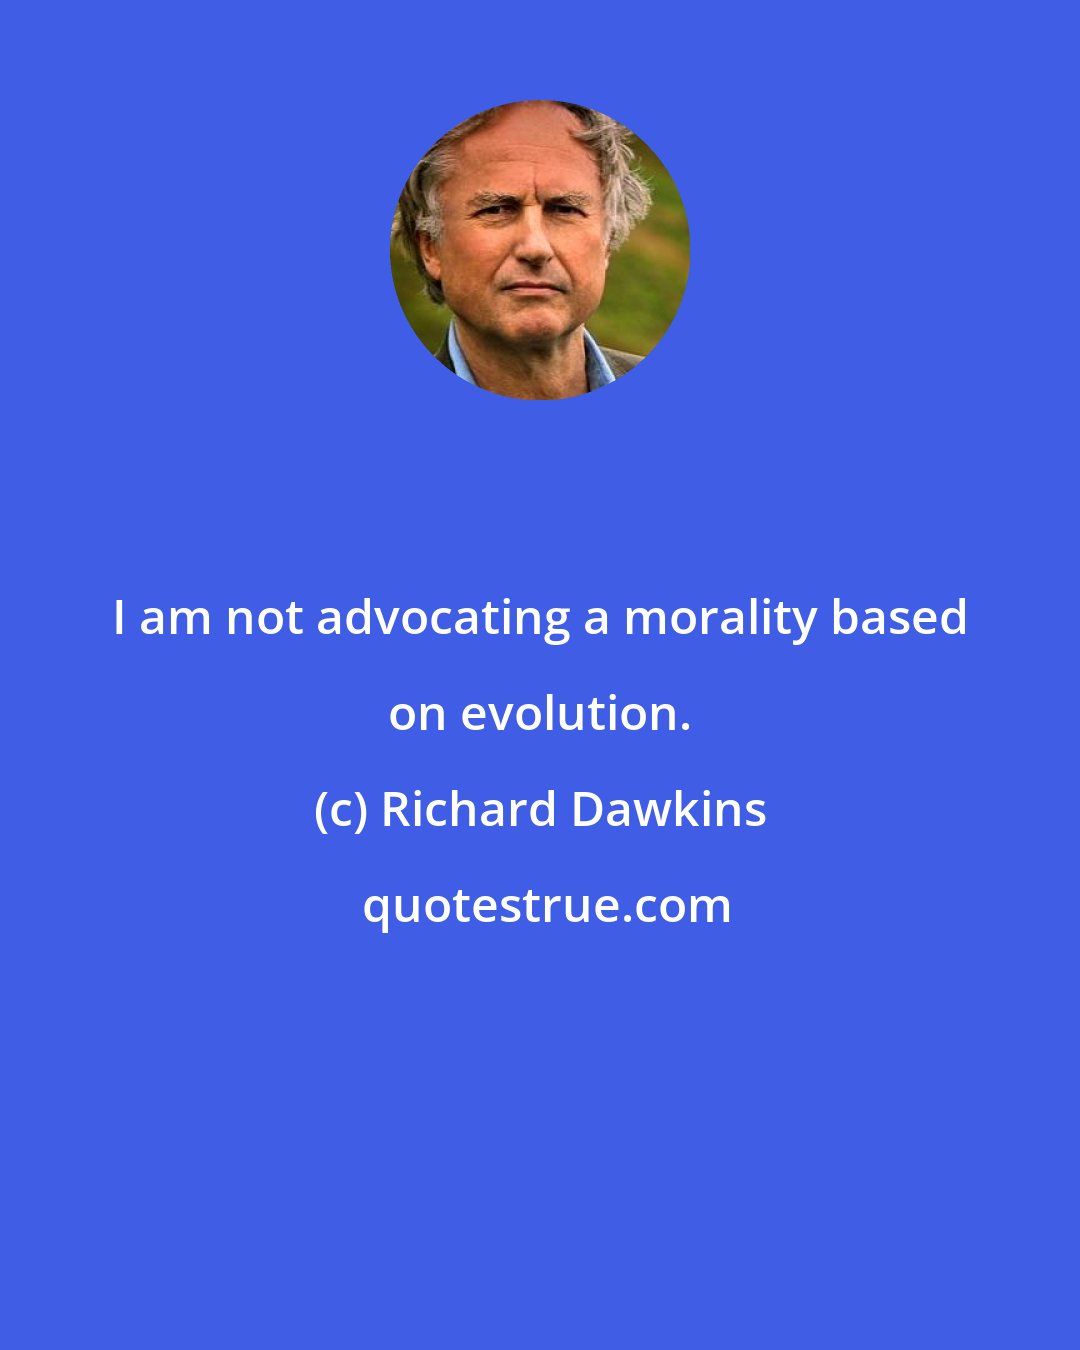 Richard Dawkins: I am not advocating a morality based on evolution.